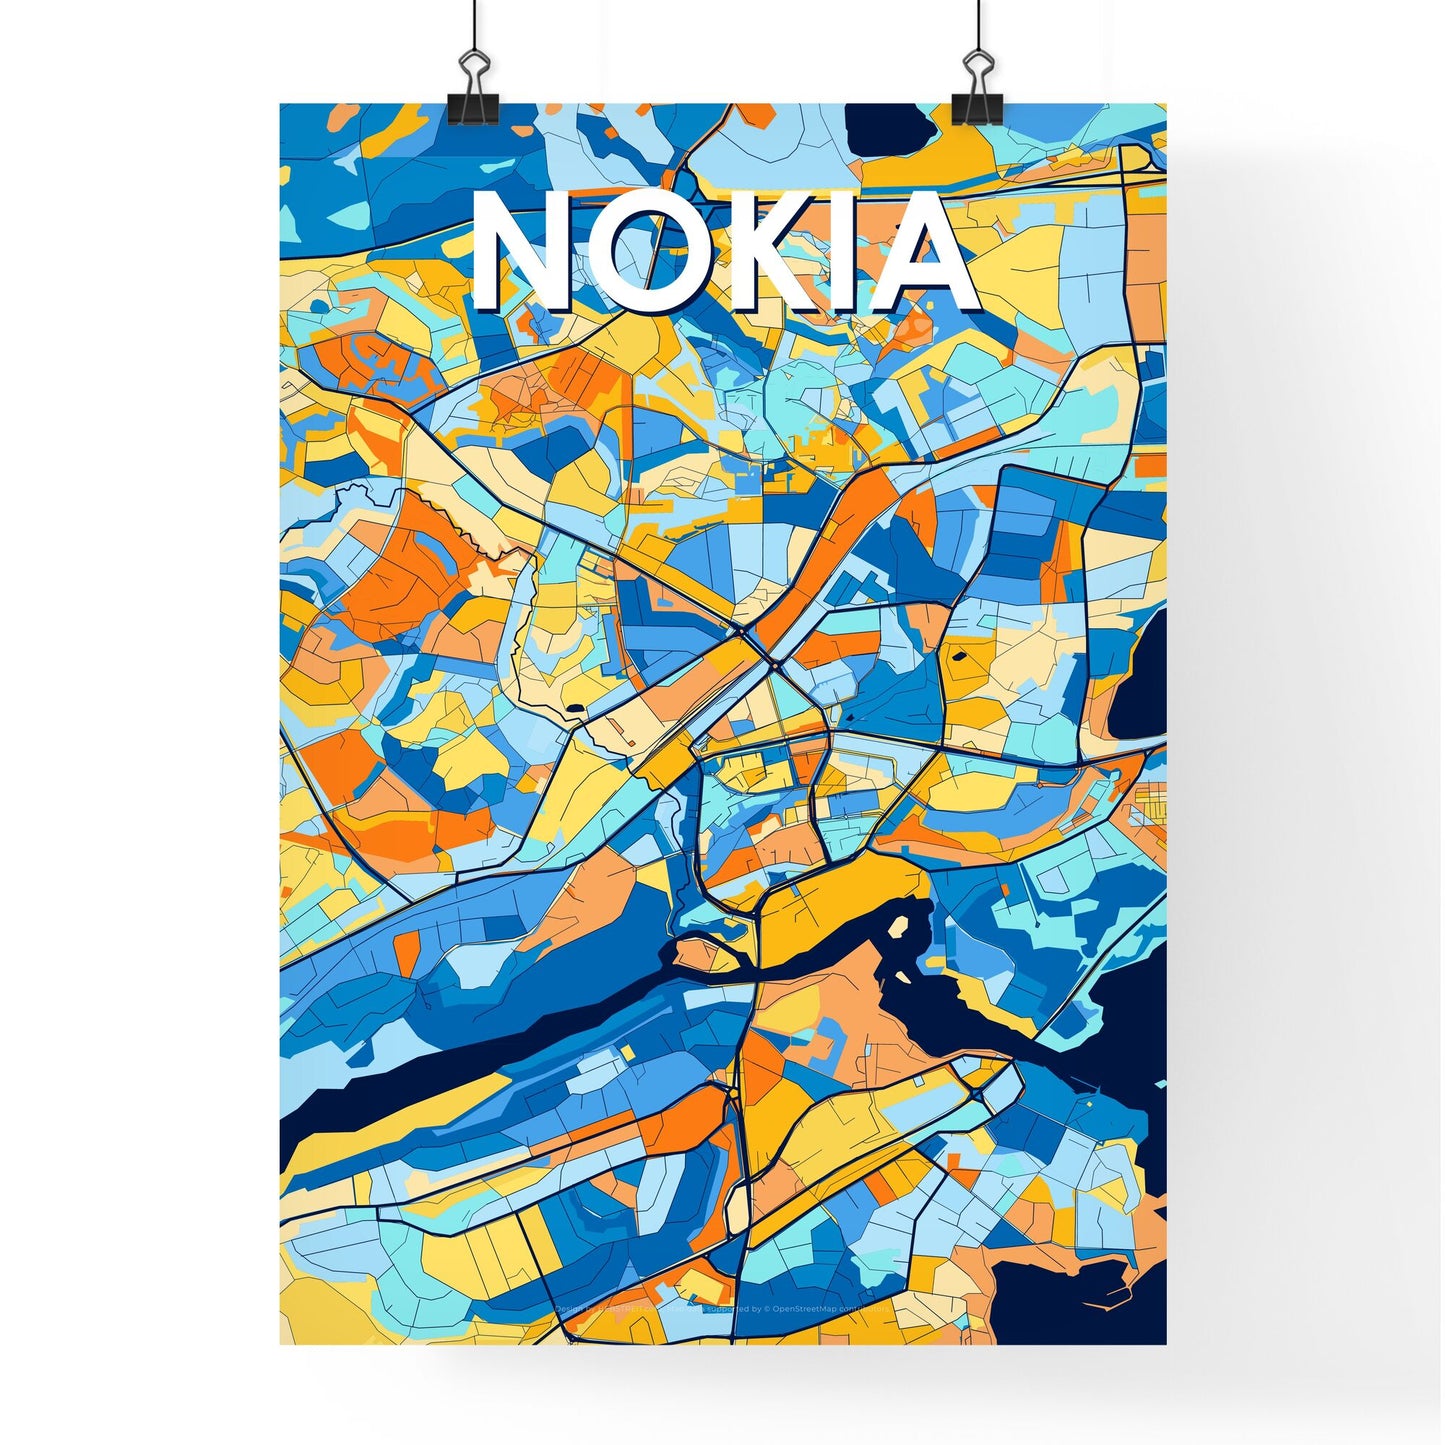 NOKIA FINLAND Vibrant Colorful Art Map Poster Blue Orange